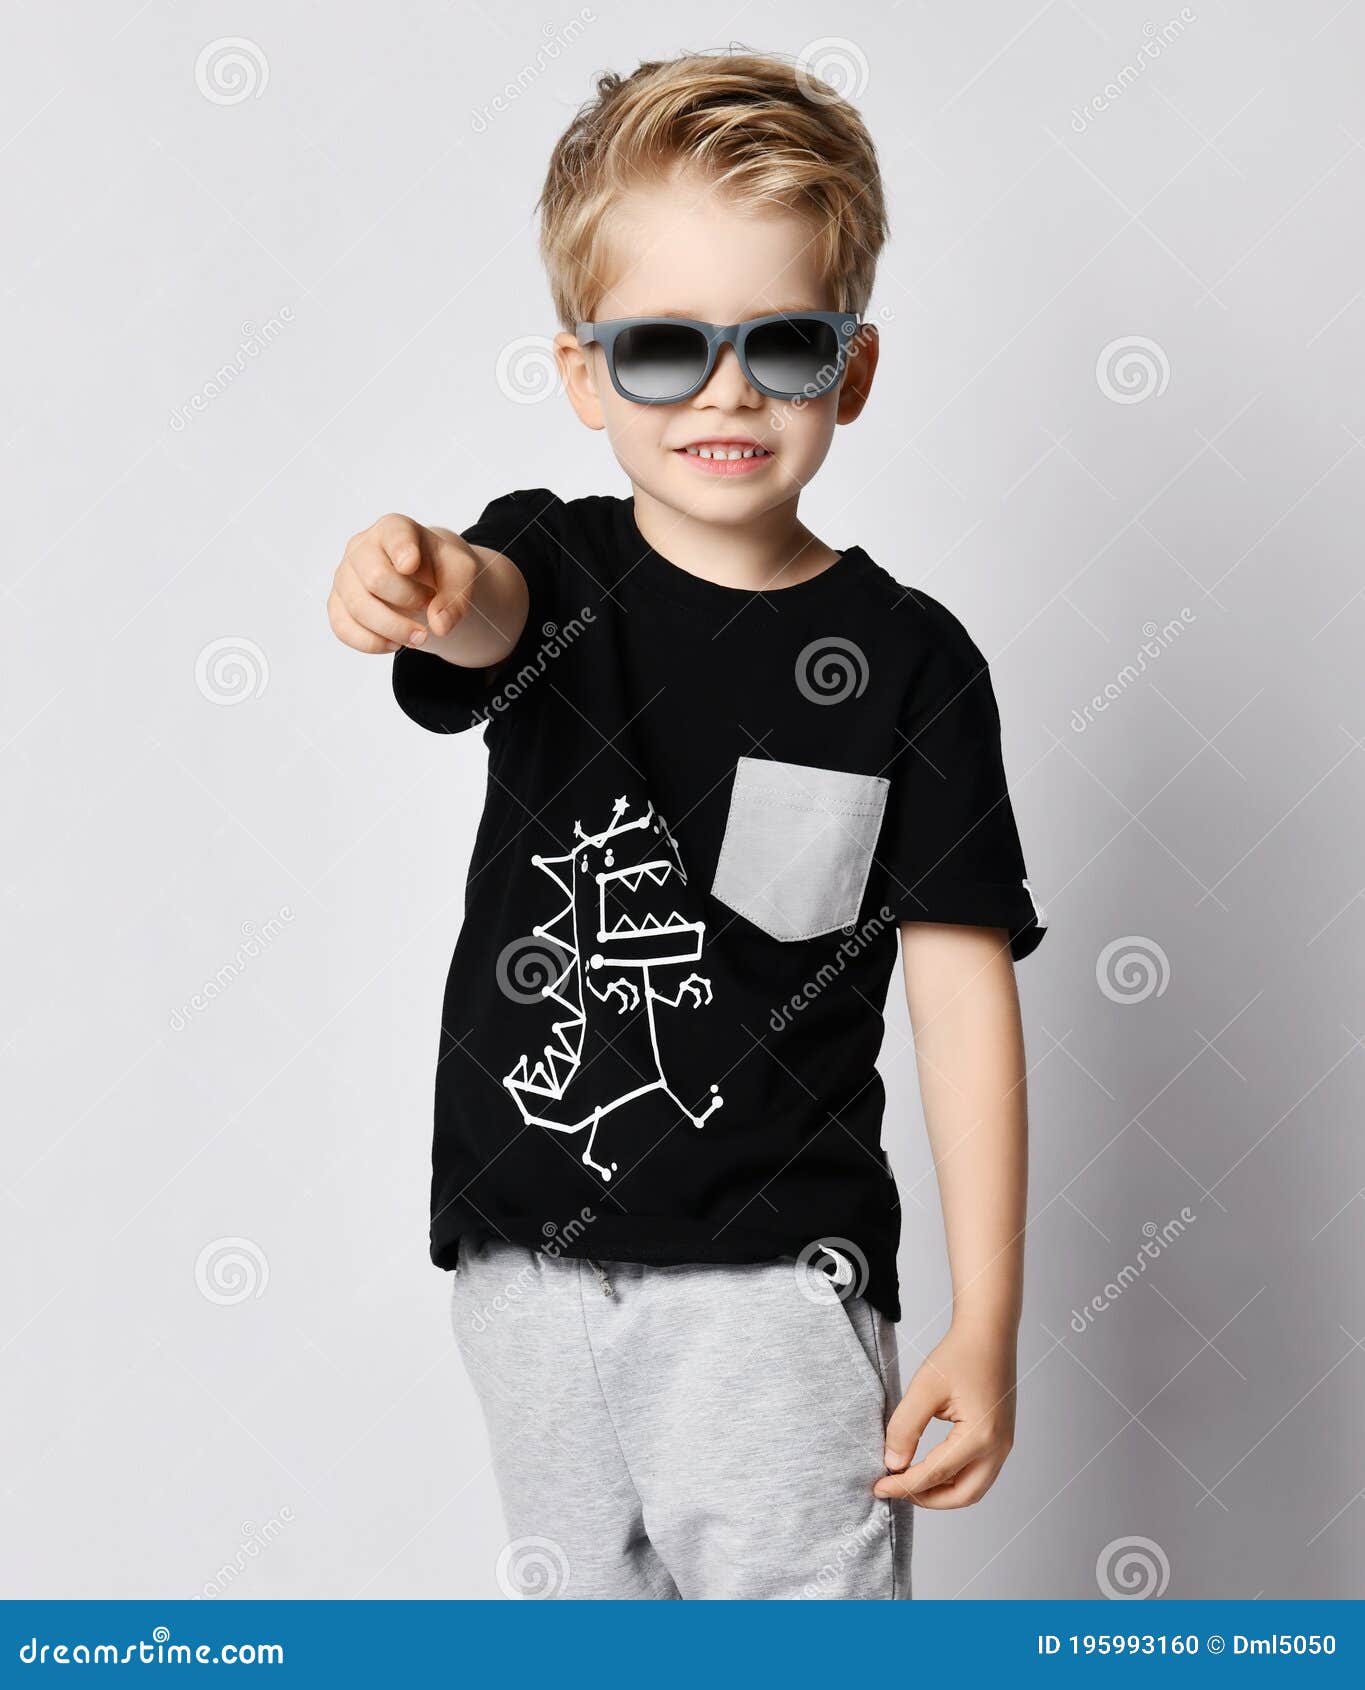 Children Kids Baby Girls Boys Cartoon Finger T Shirt Tops Tee Outfits Clothes 